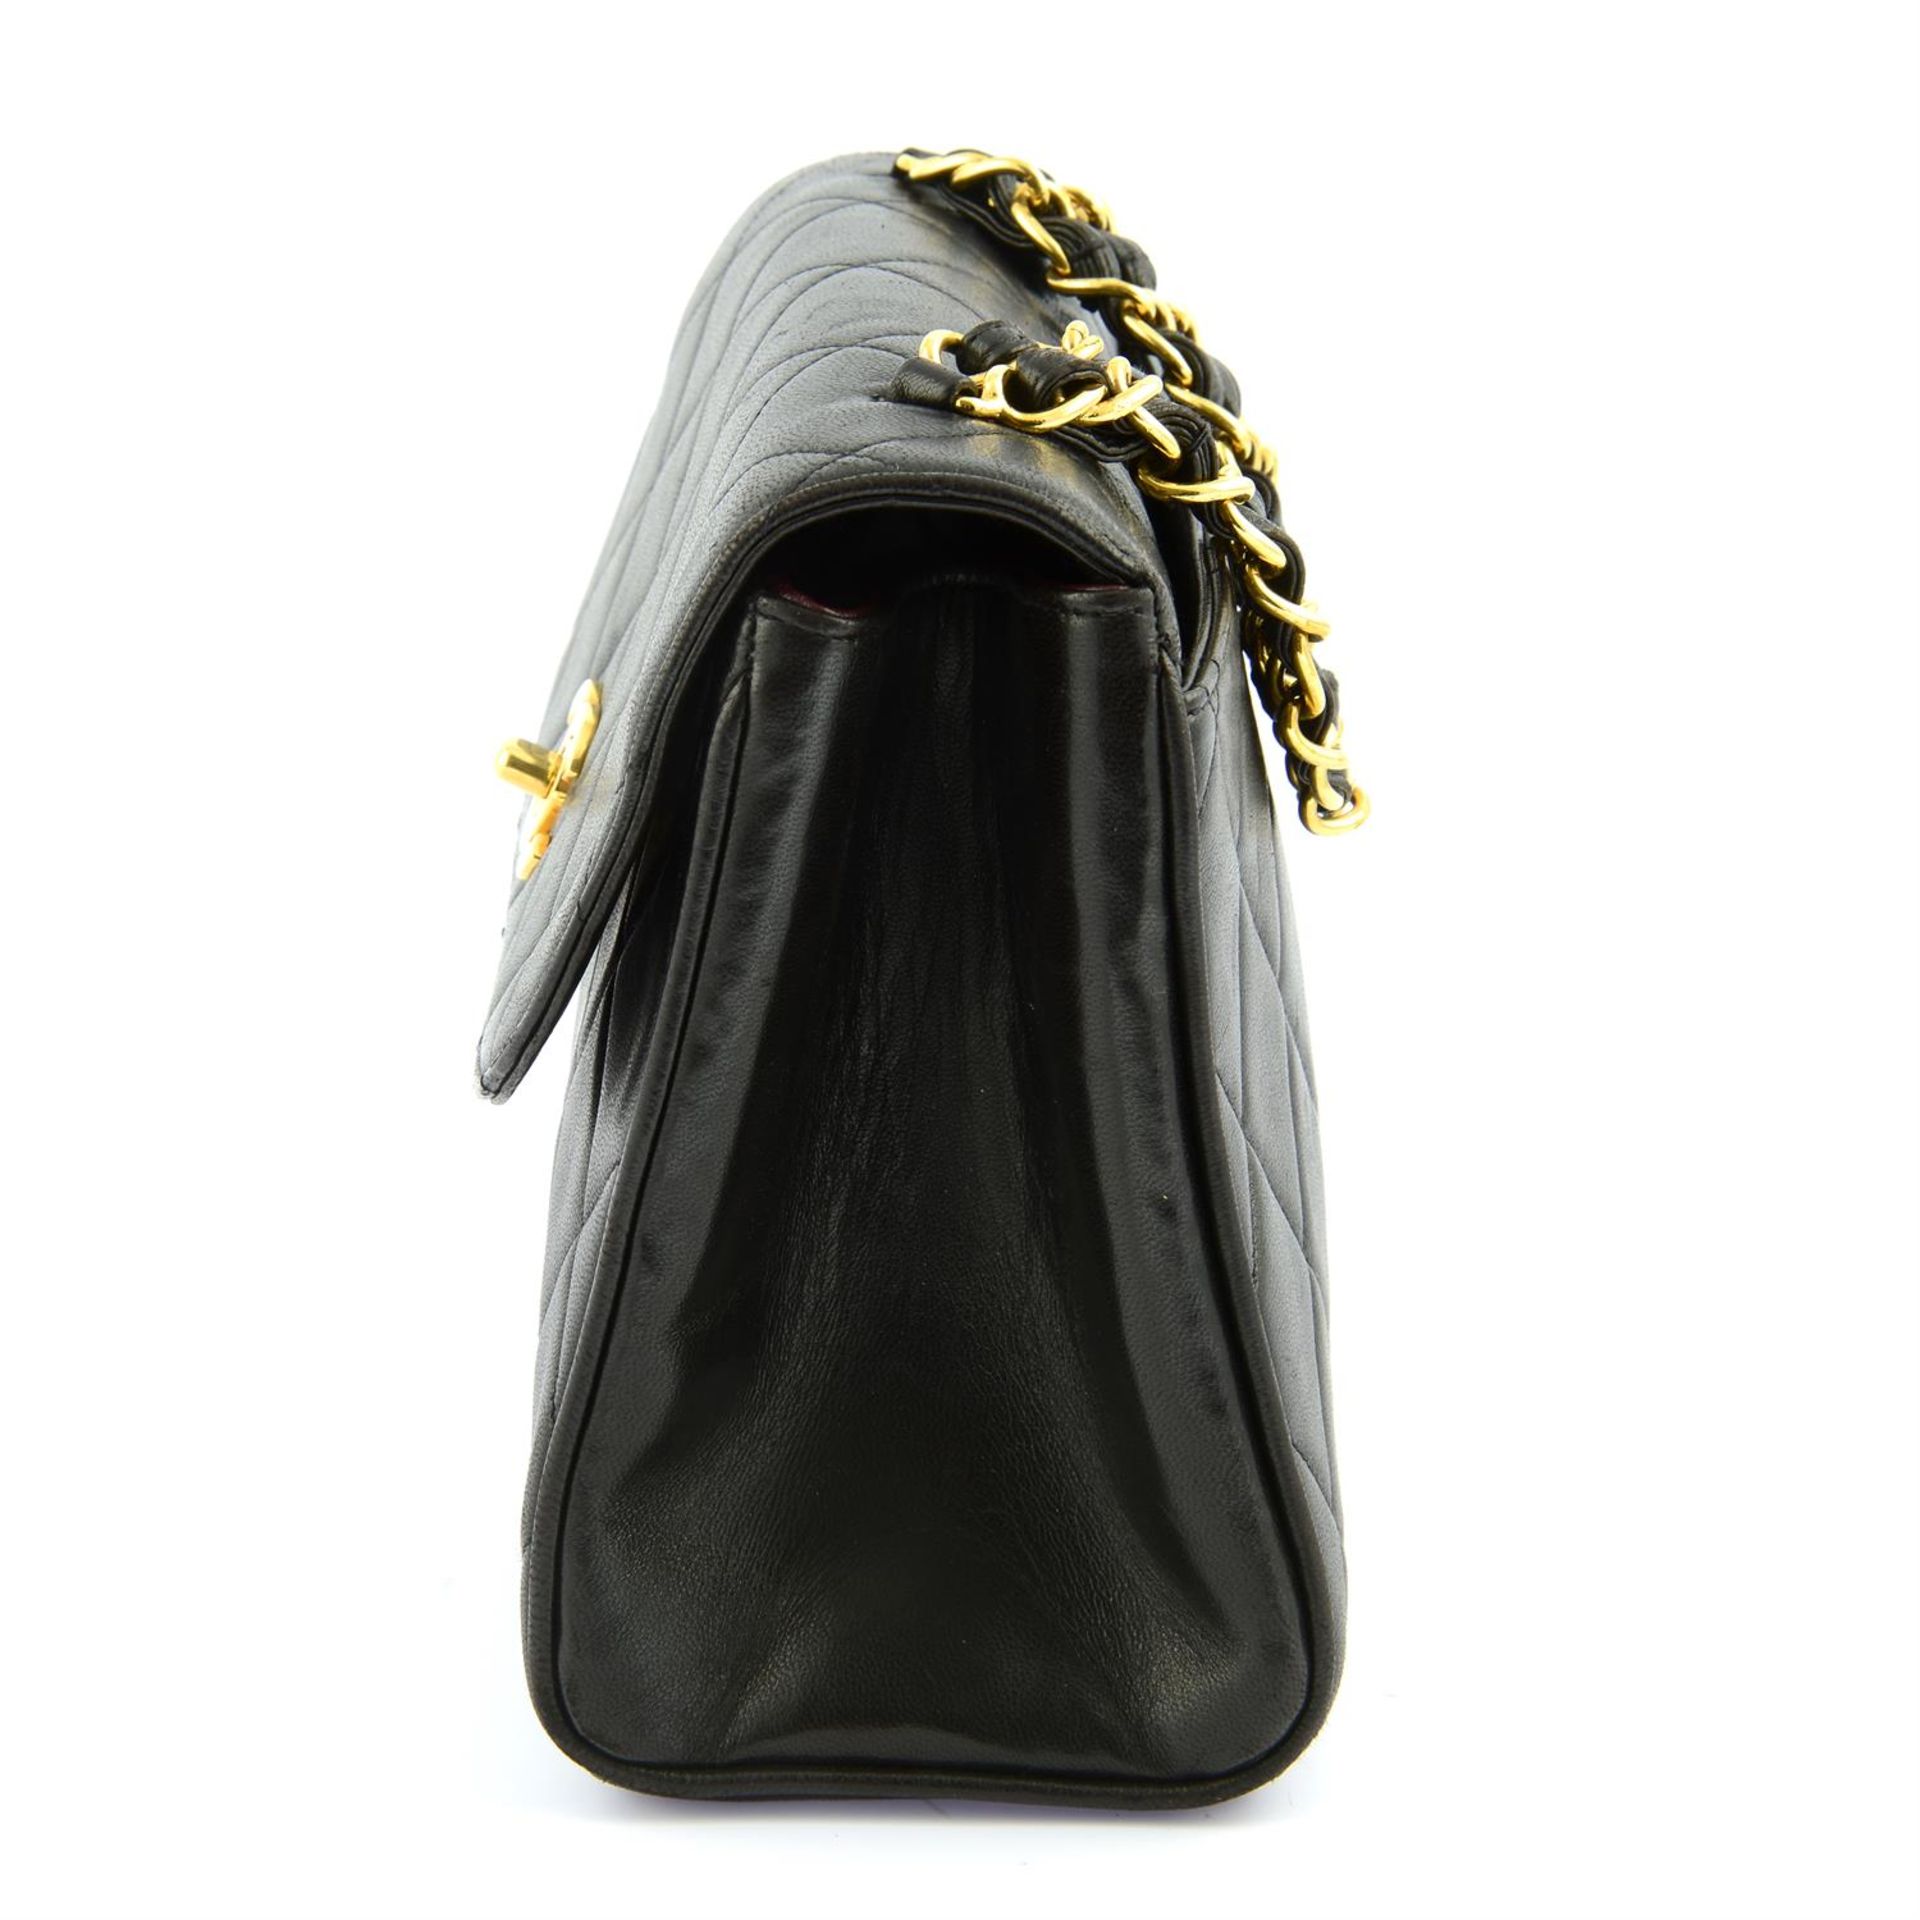 CHANEL - a black lambskin leather top handle single flap handbag. - Image 3 of 5